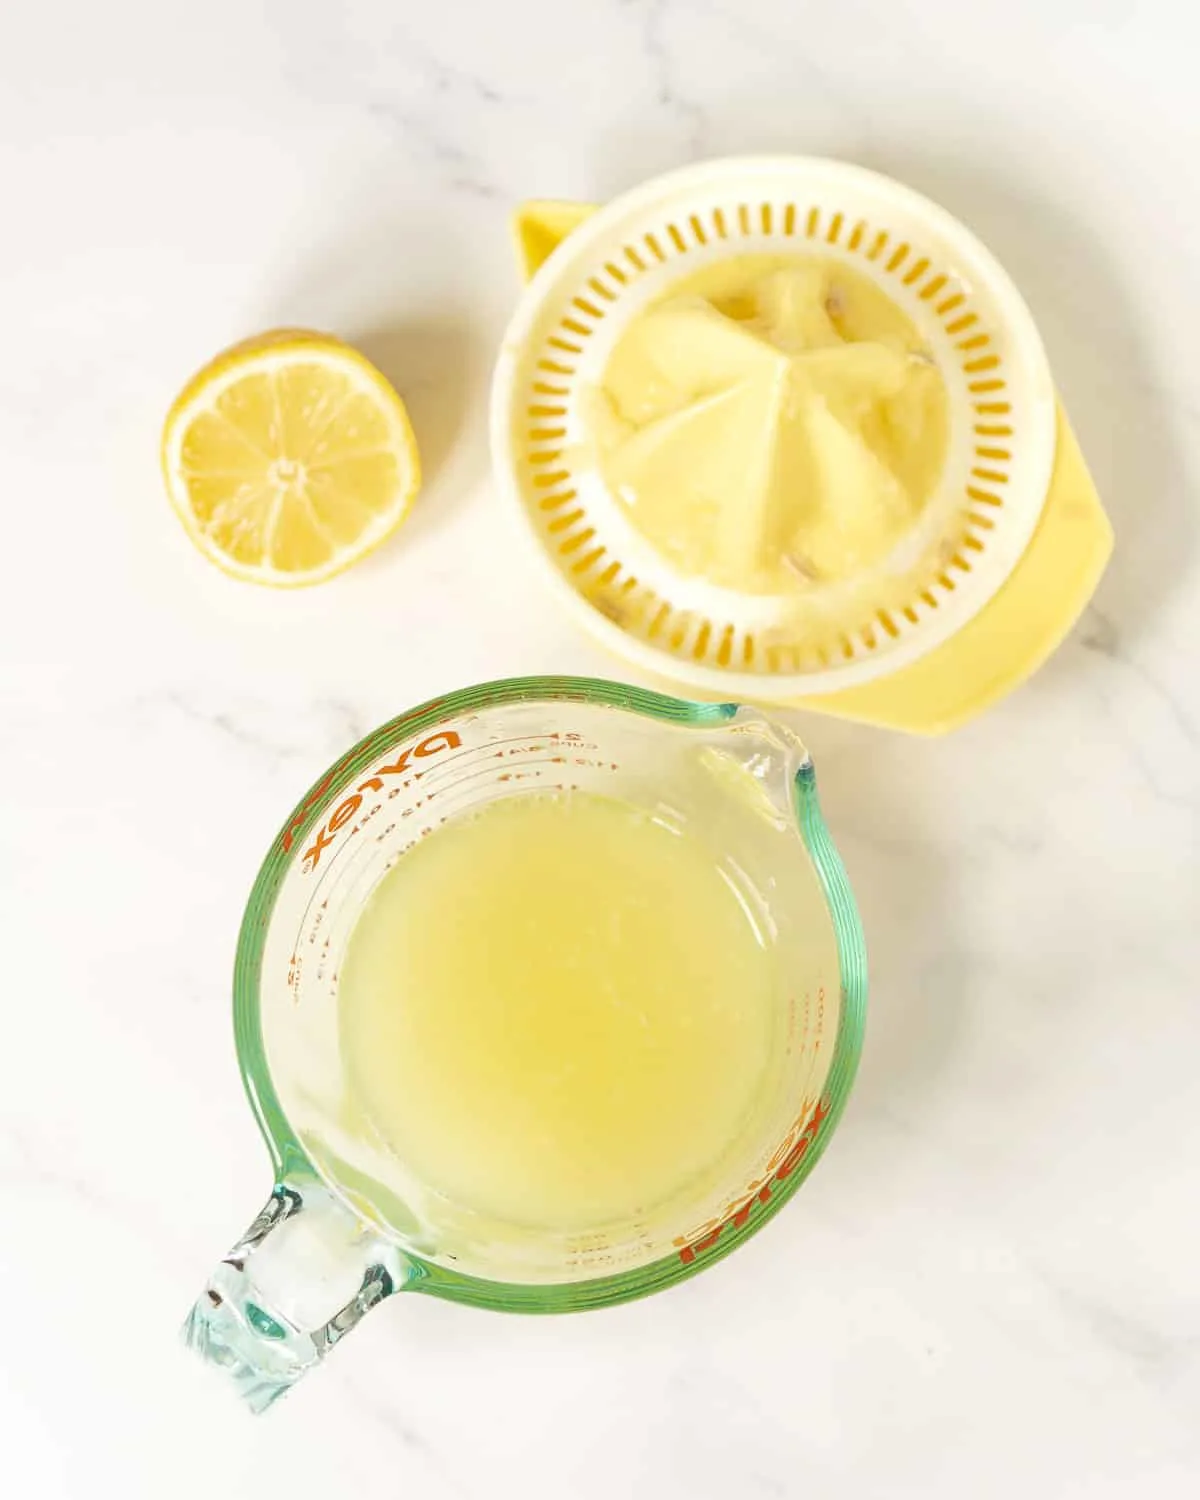 1 cup of fresh squeezed lemon juice